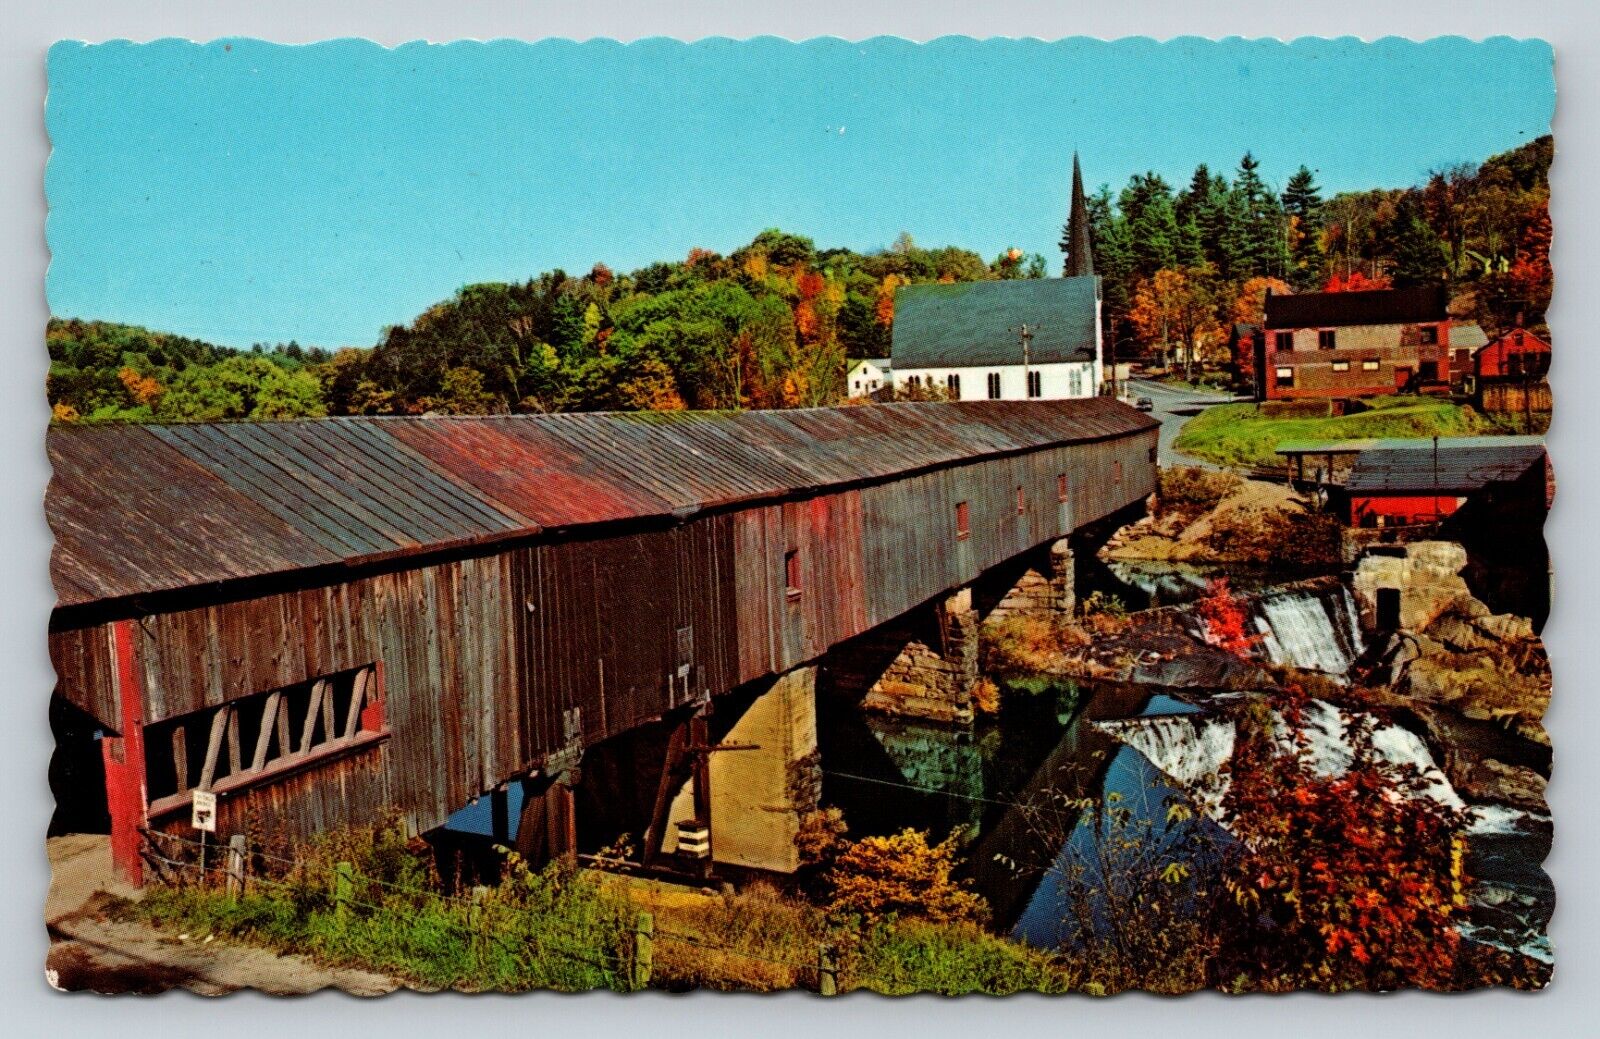 New Hampshire Bath Covered Bridge Over Ammonoosuc River Vintage Postcard A107